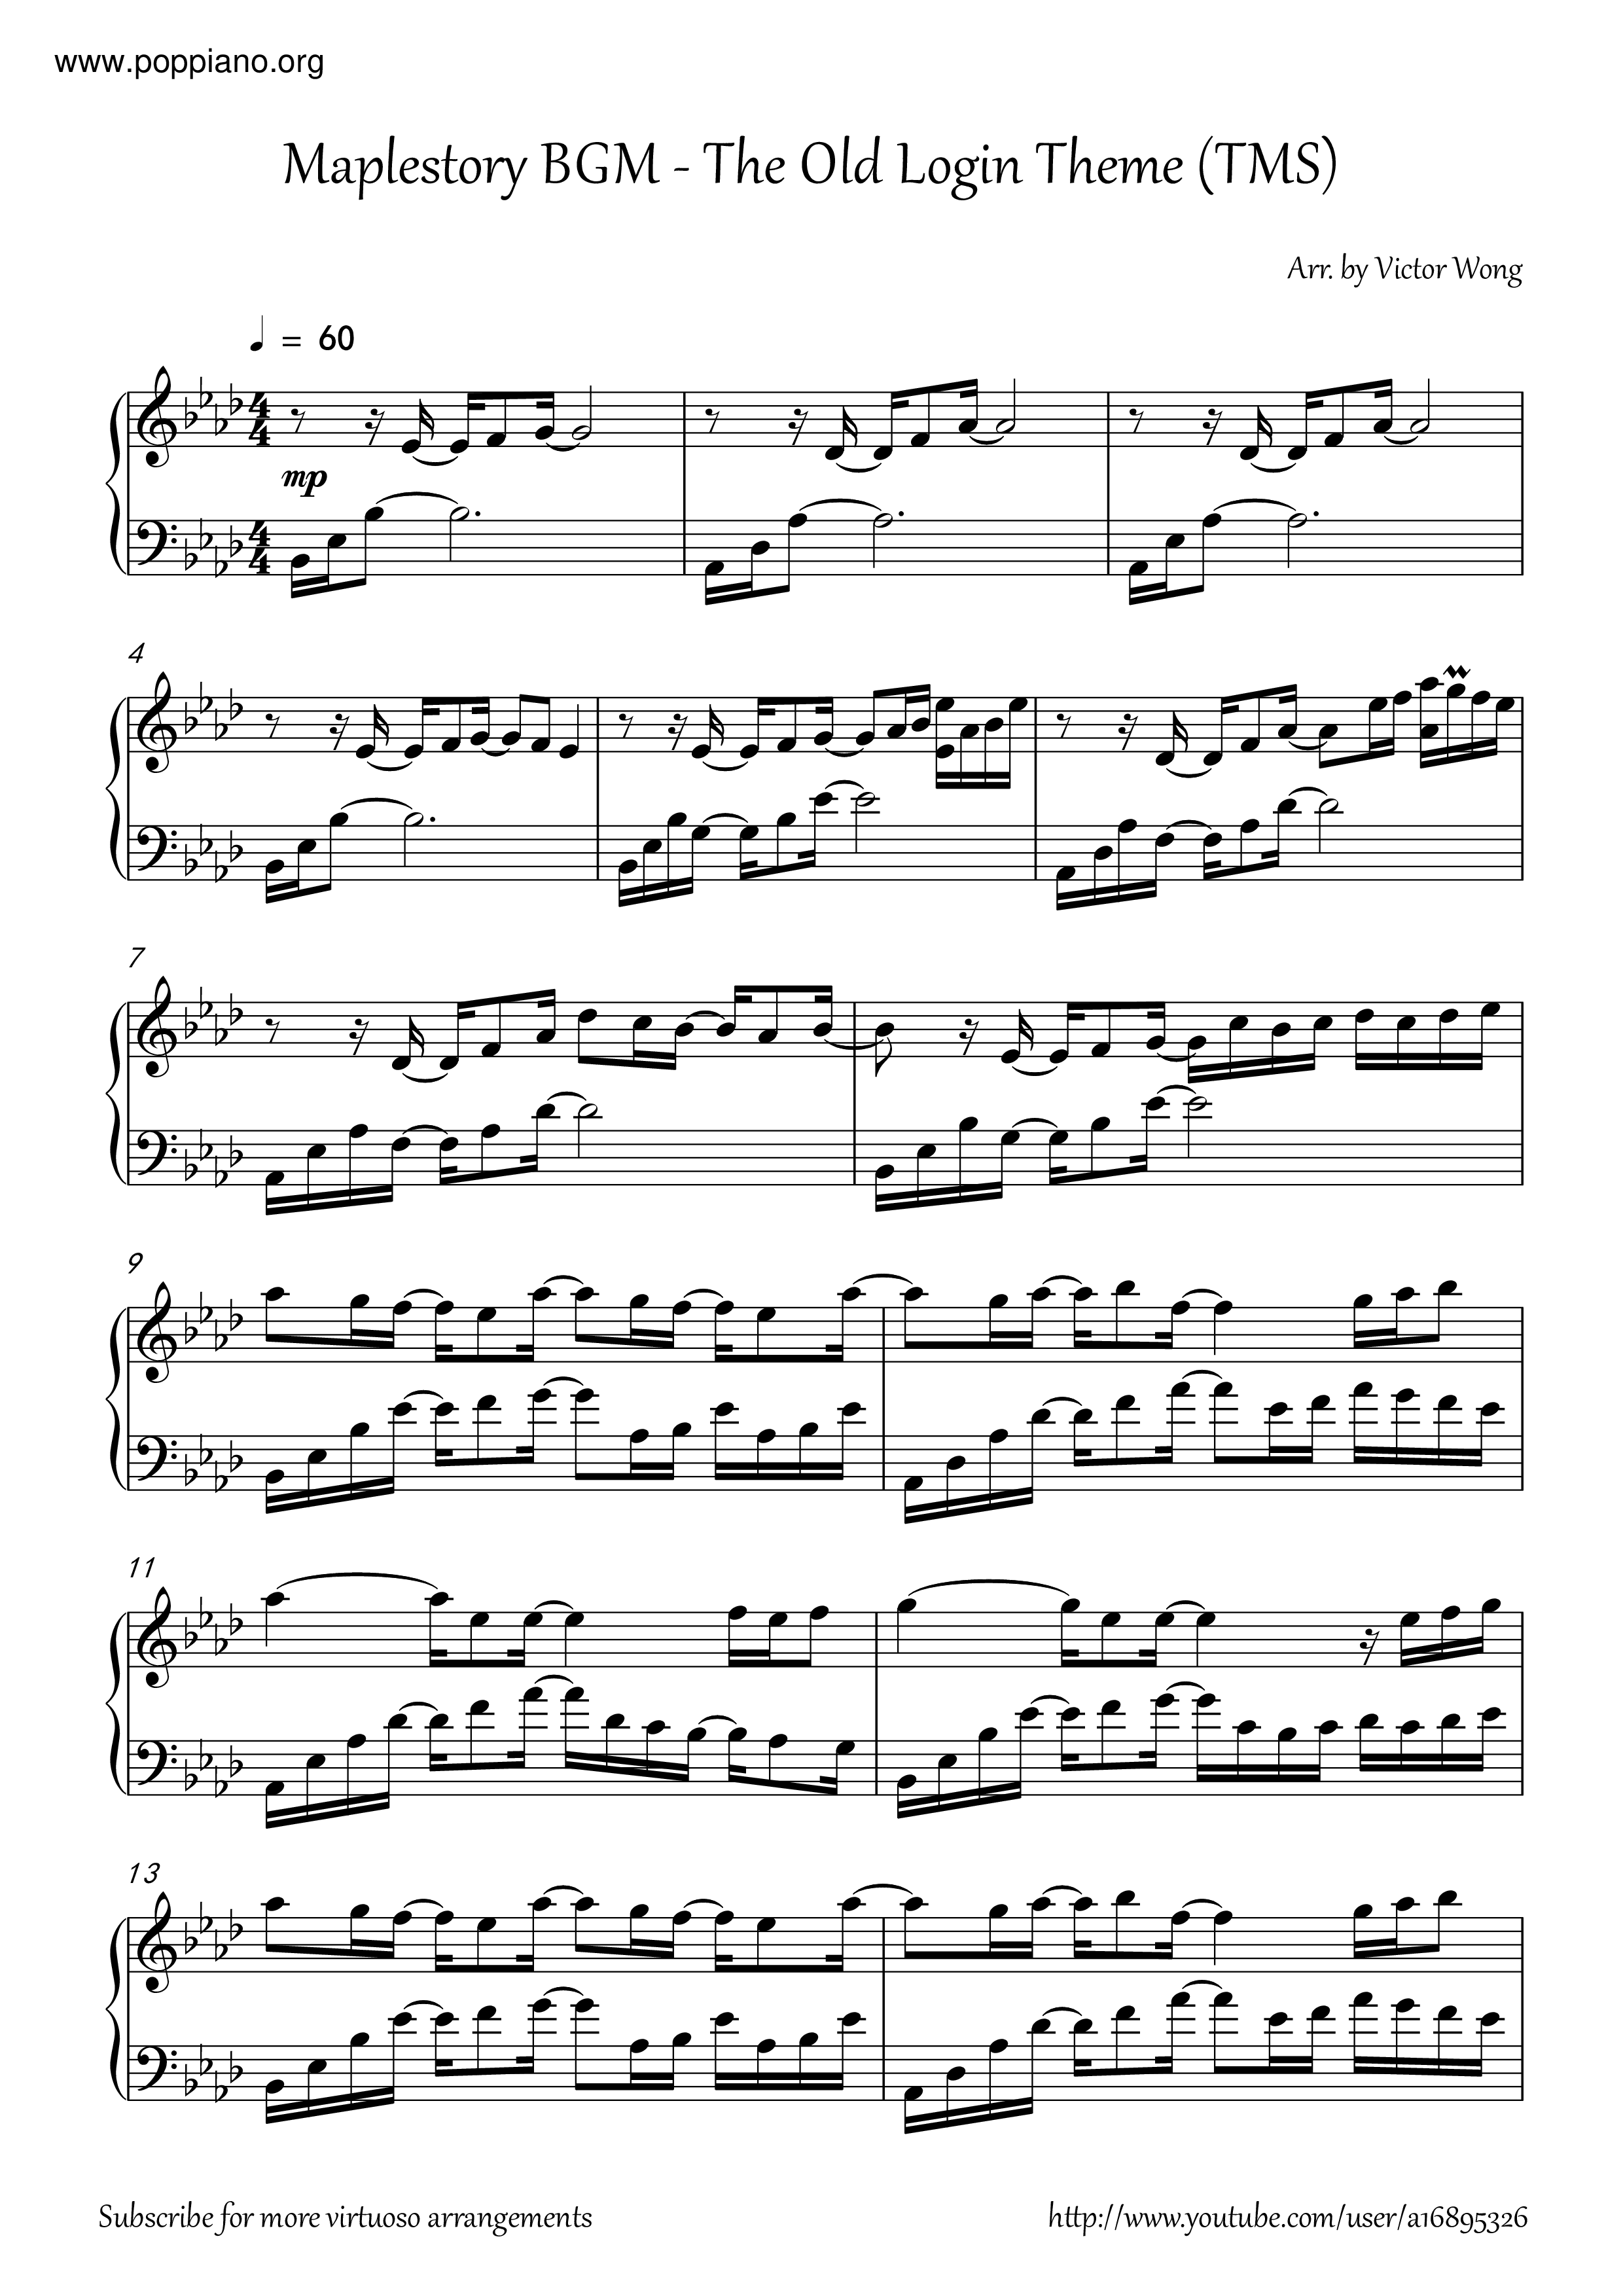 Maplestory - The Old Login Theme Score